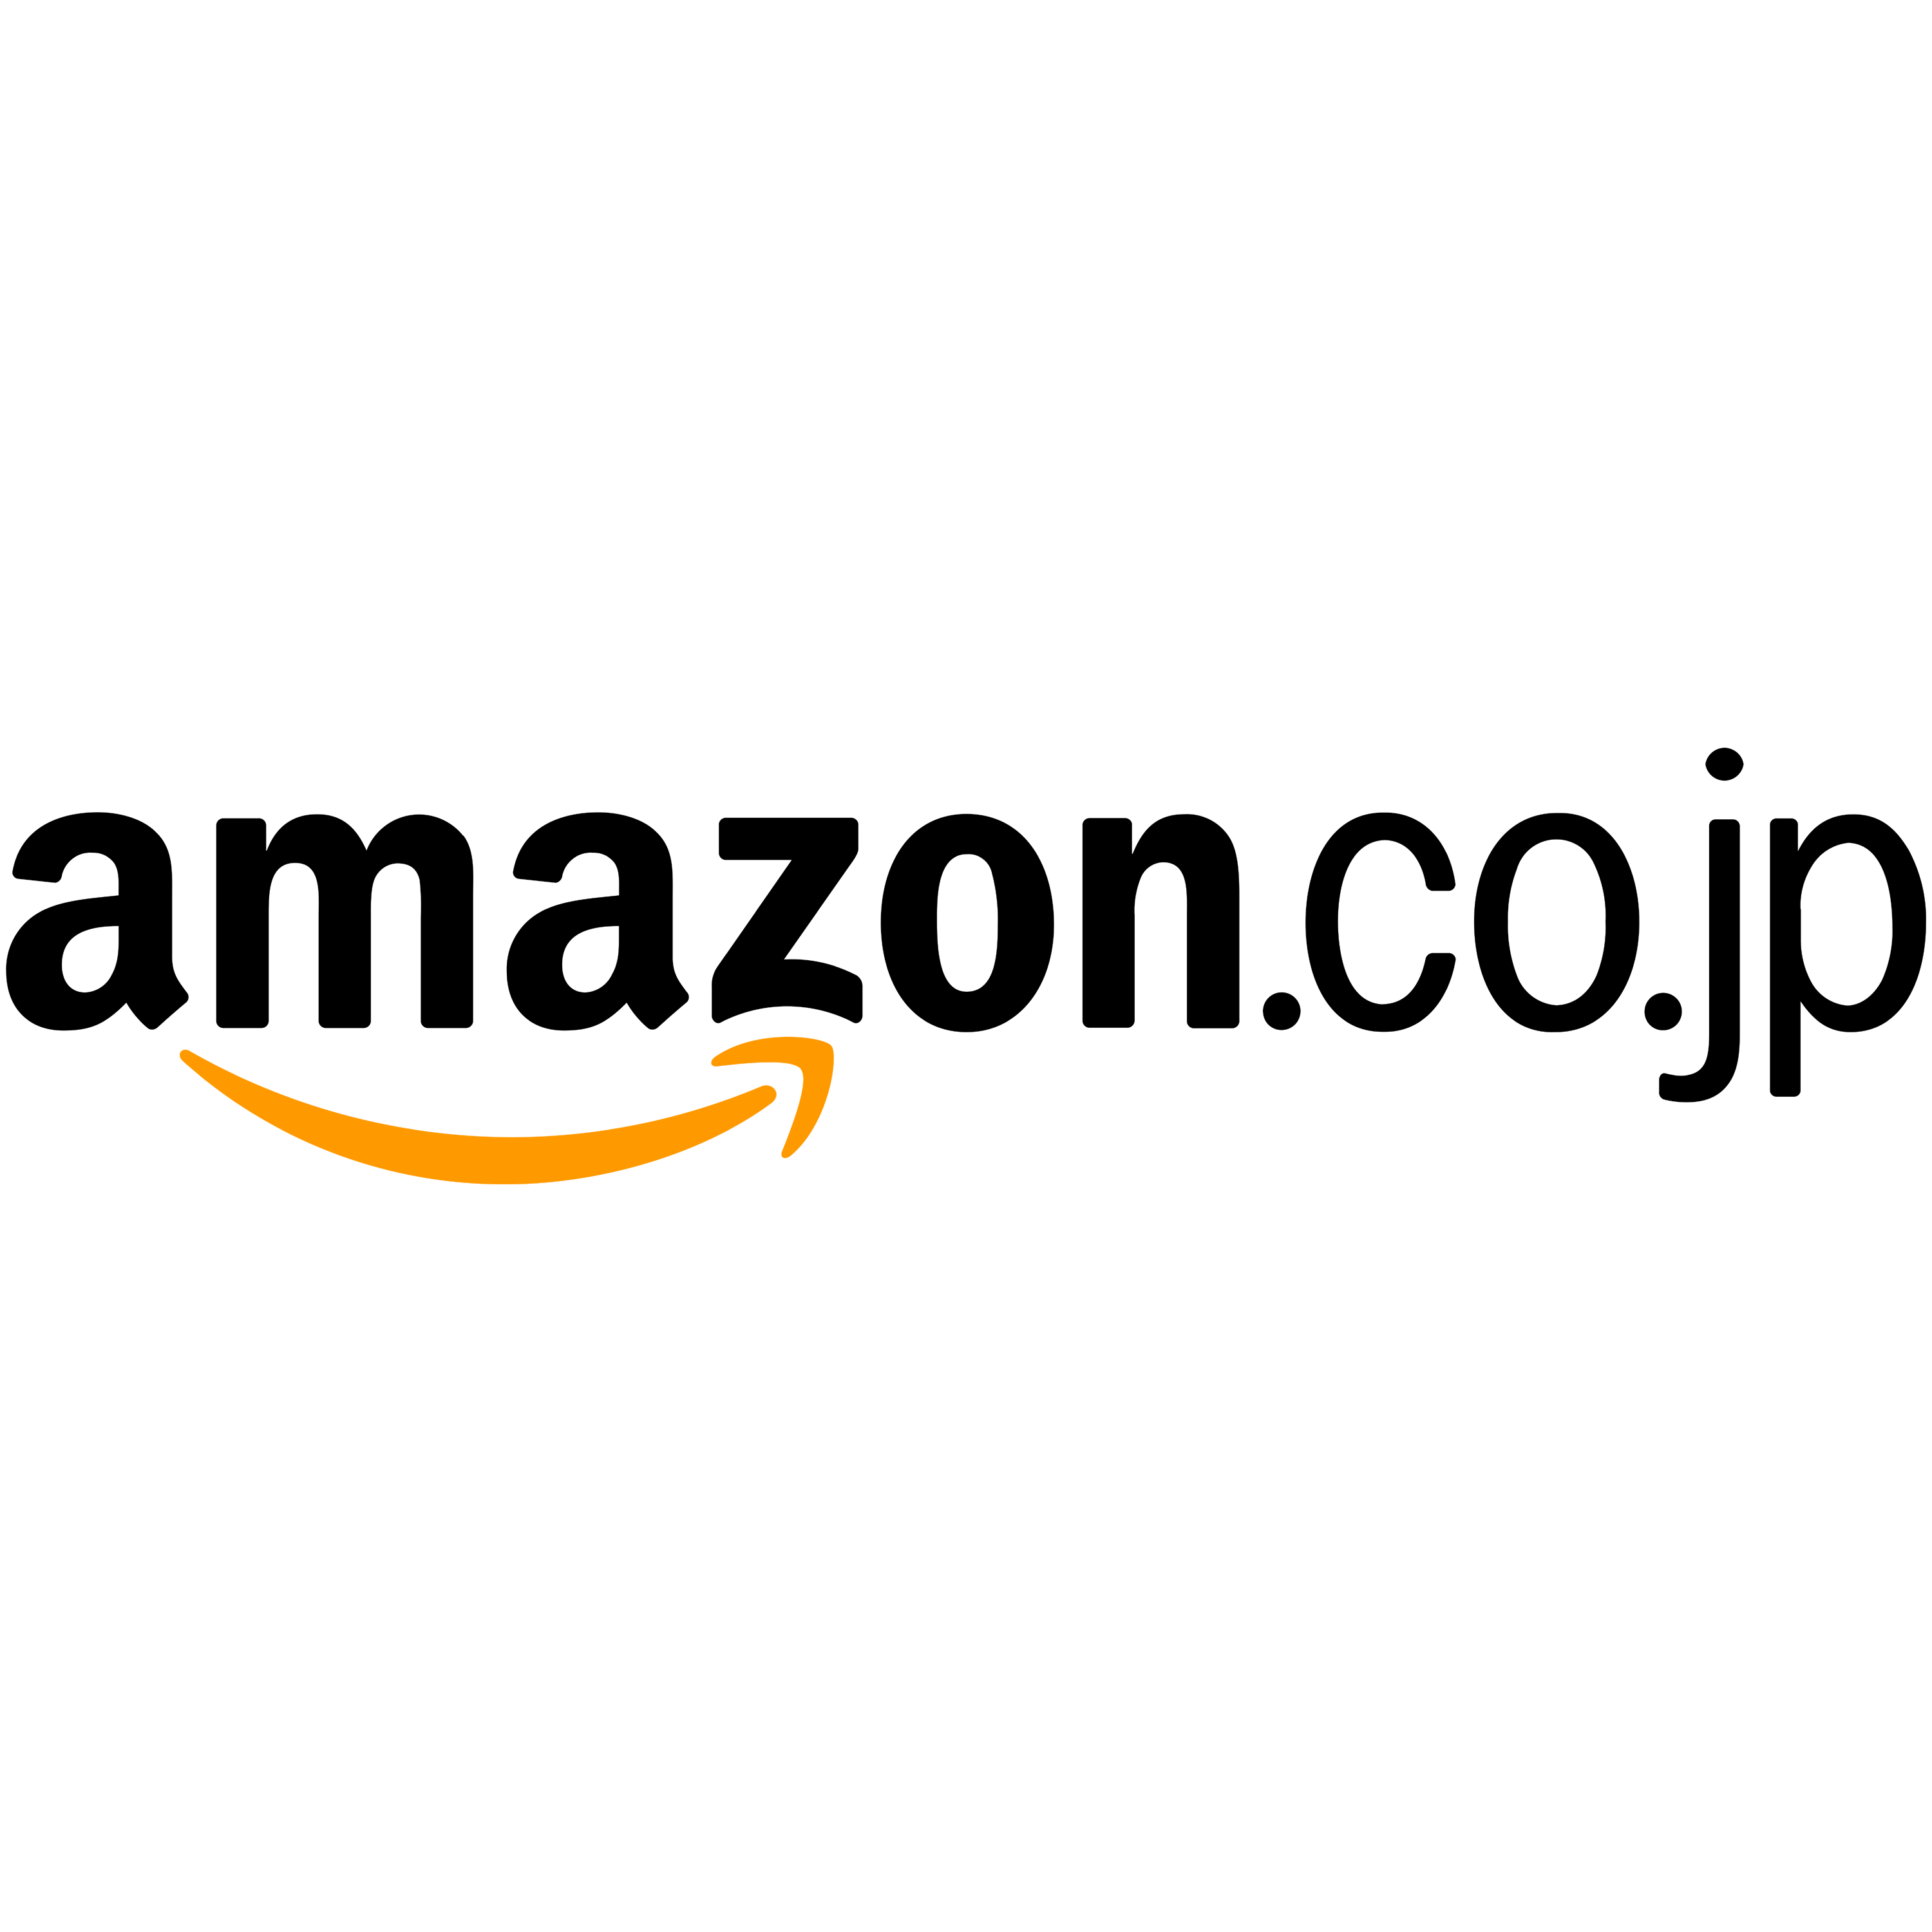 Amazon.co.jp Logo Transparent Image